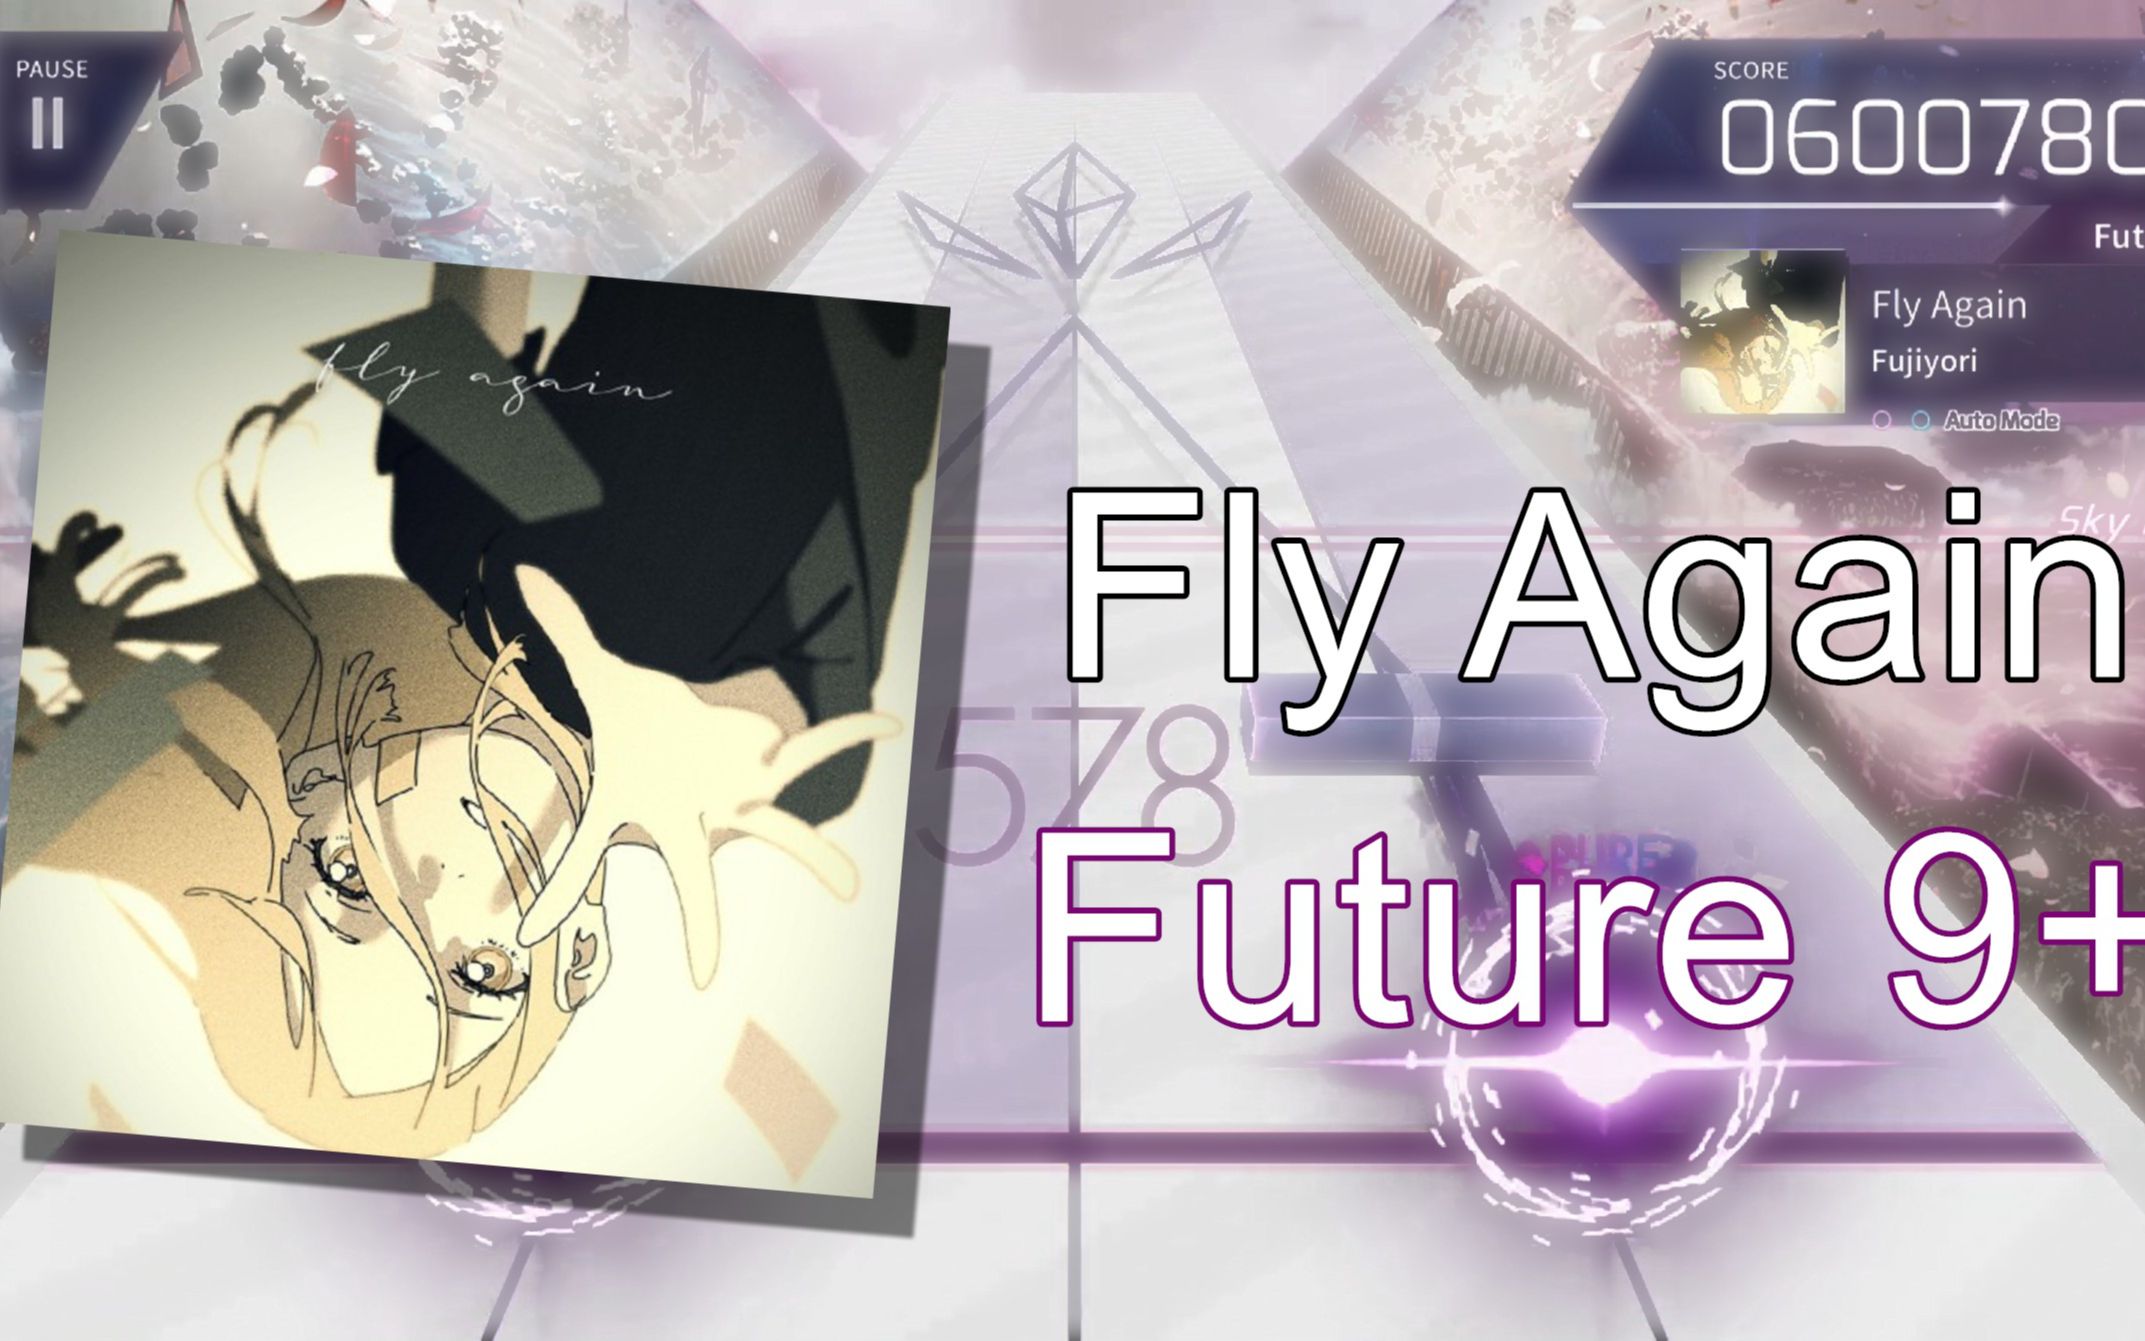 [Arcaea Fanmade] 在阿卡伊也能挖矿 Fly Again / Future 9+